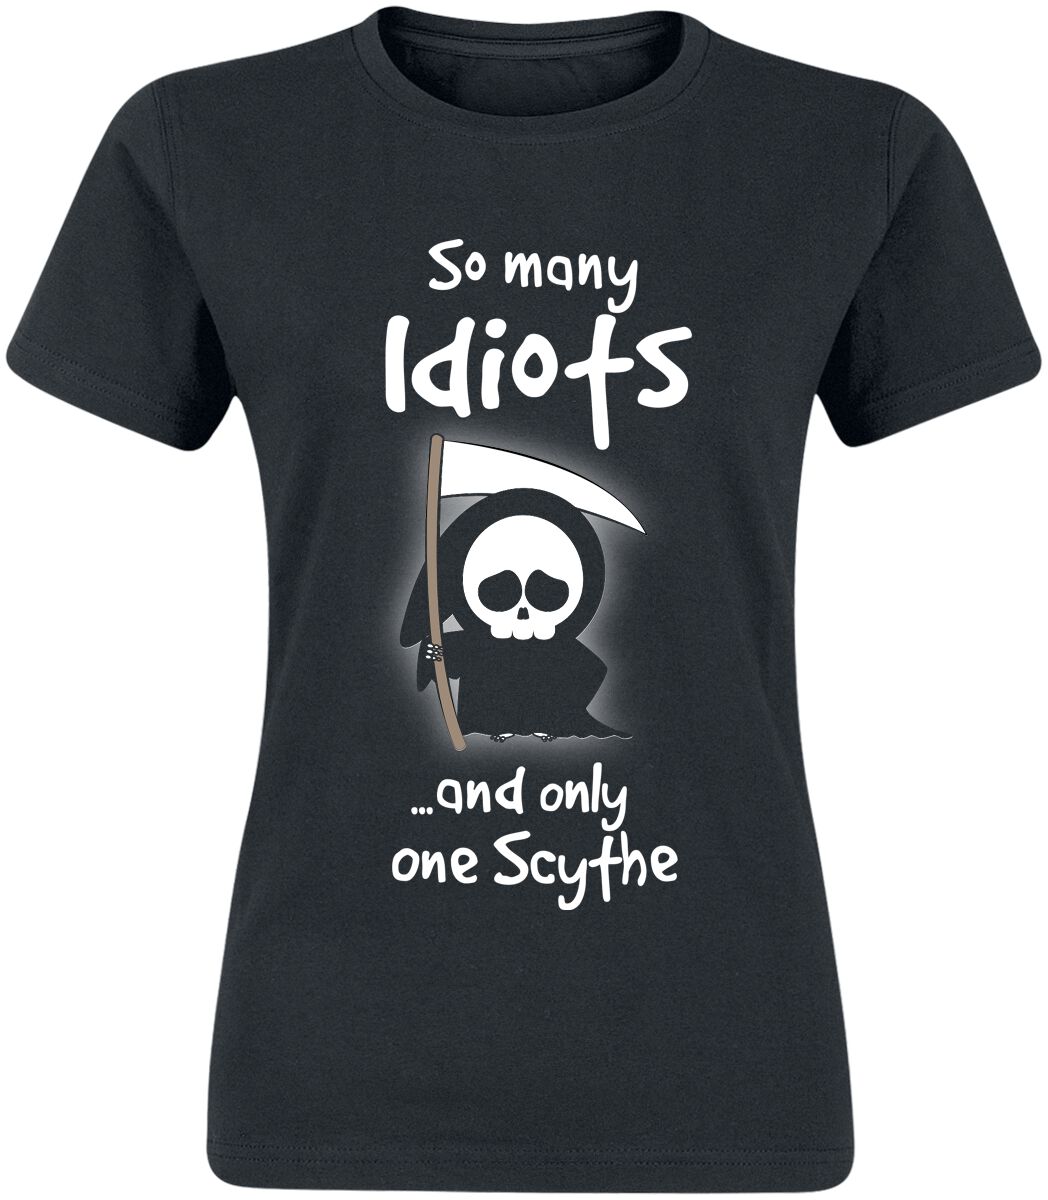 T-Shirt Manches courtes Fun de Slogans - So Many Idiots And Only One Scythe - S à 3XL - pour Femme -